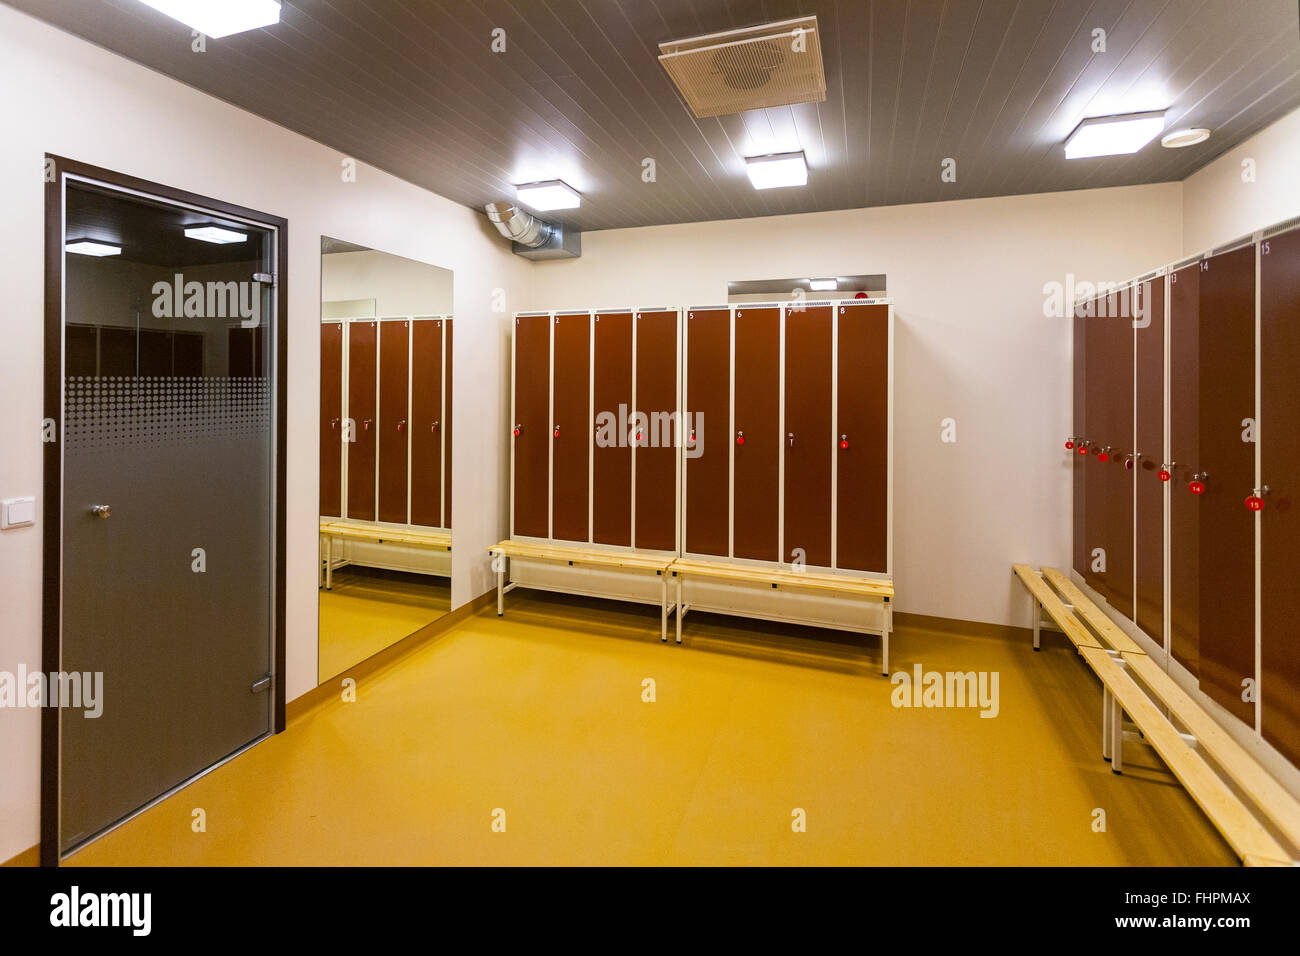 Estonia, Tartu, Heino Eller's Music school, locker's room, wardrobe Stock Photo